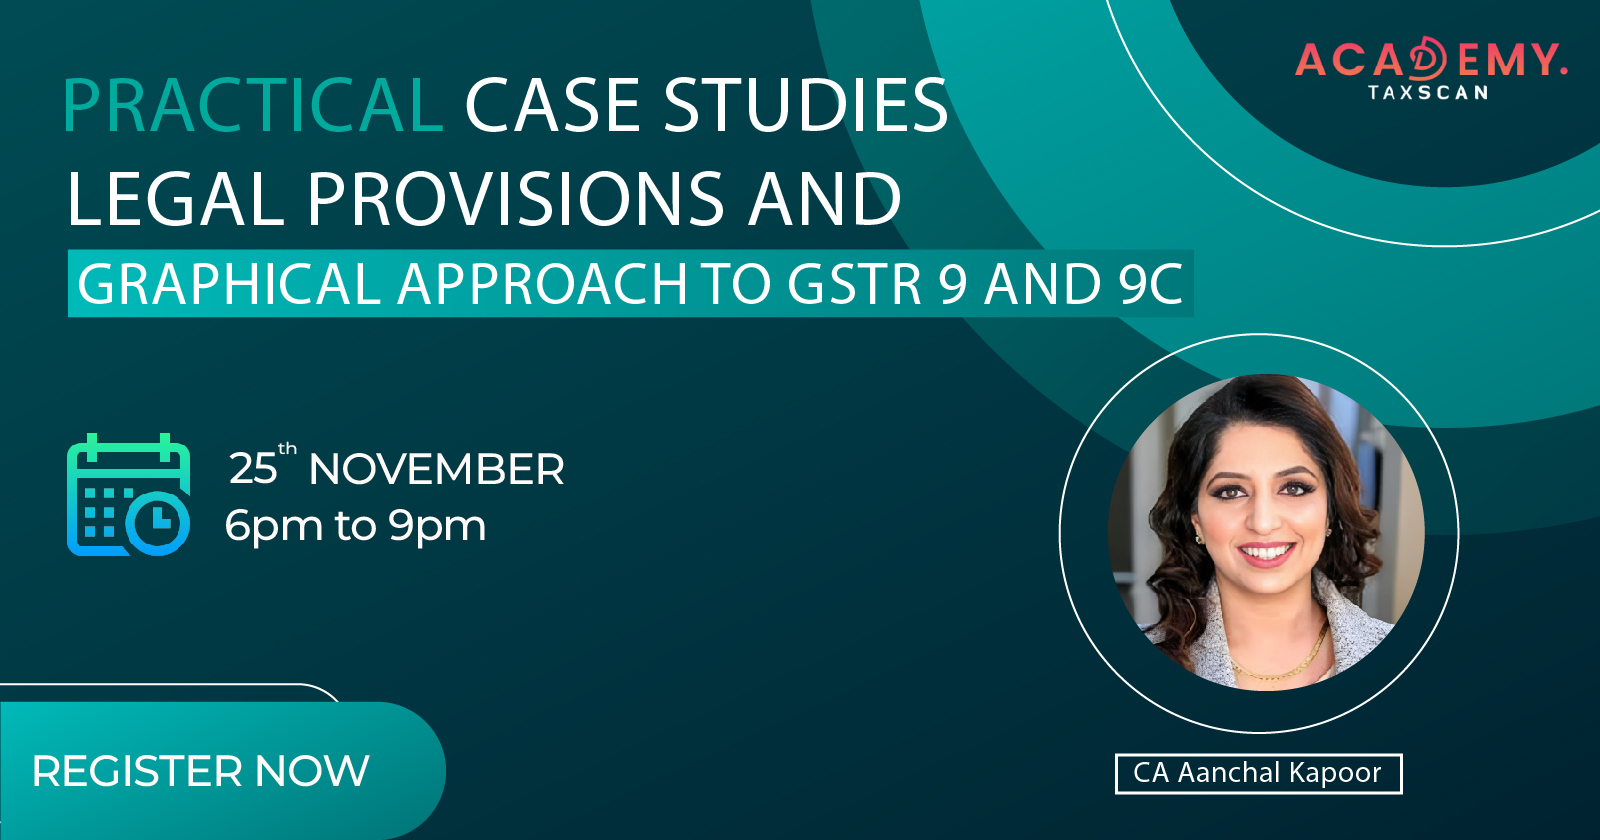 Practical case studies - legal provisions - GSTR 9 - GSTR 9C - GSTR - GST Course - Course on GST - taxscan Academy - Taxscan